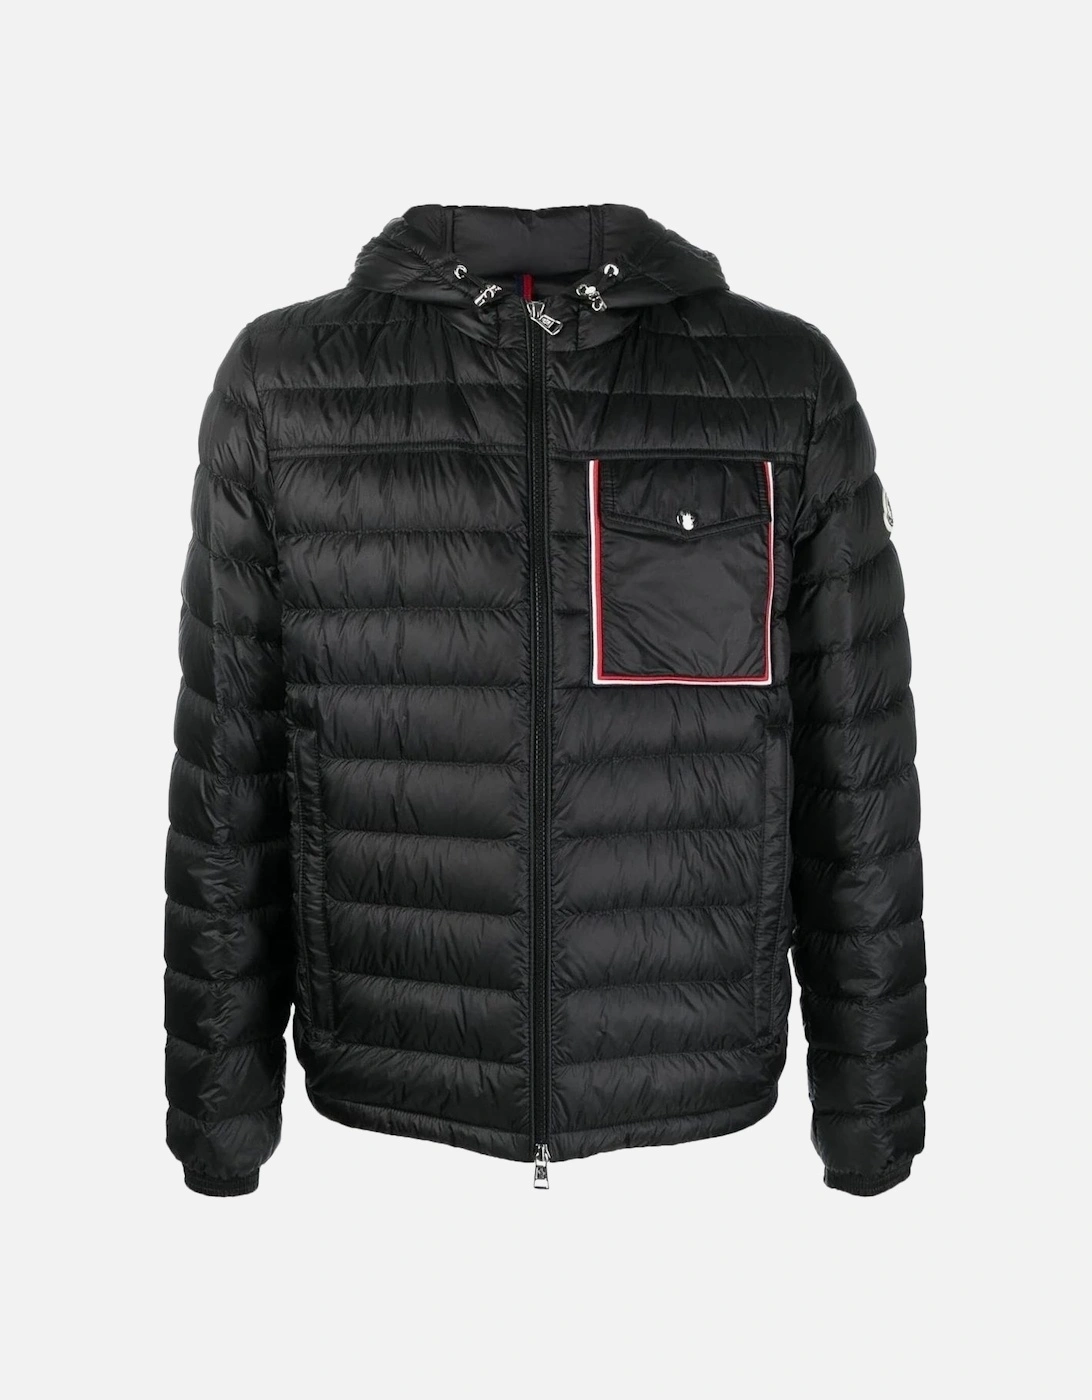 Lihou Jacket Black, 9 of 8